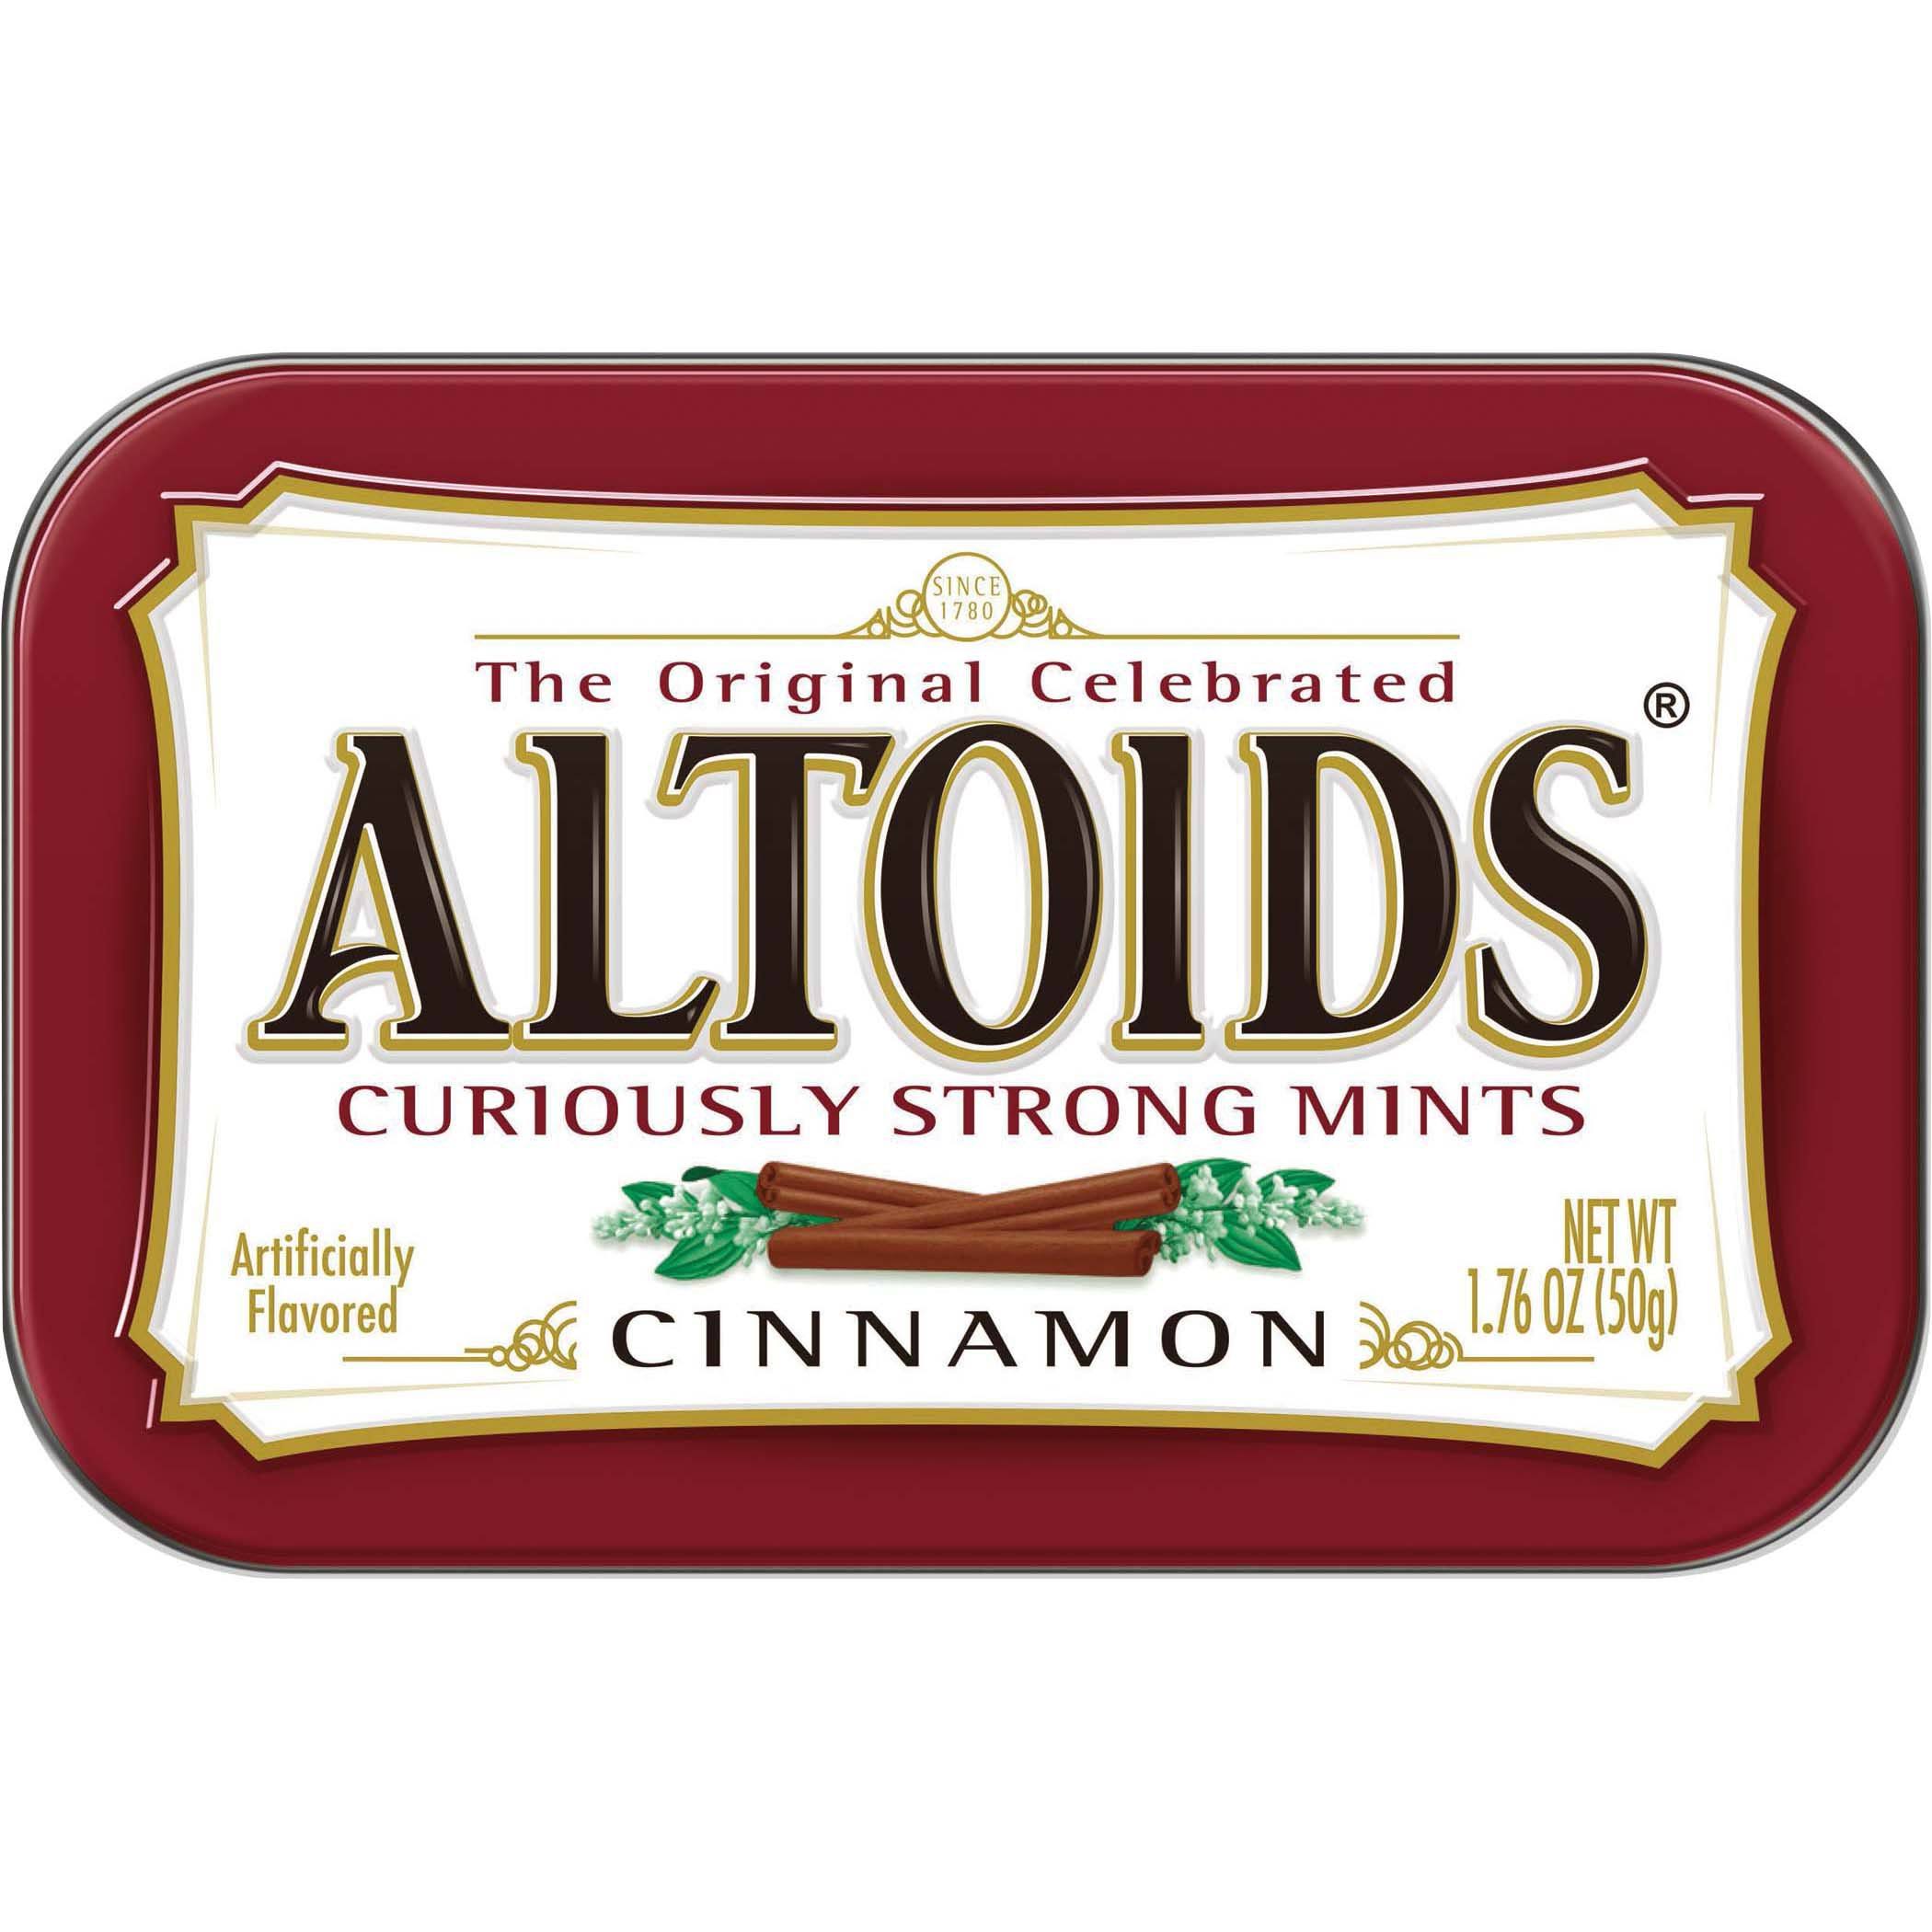 Altoids Mints - Cinnamon